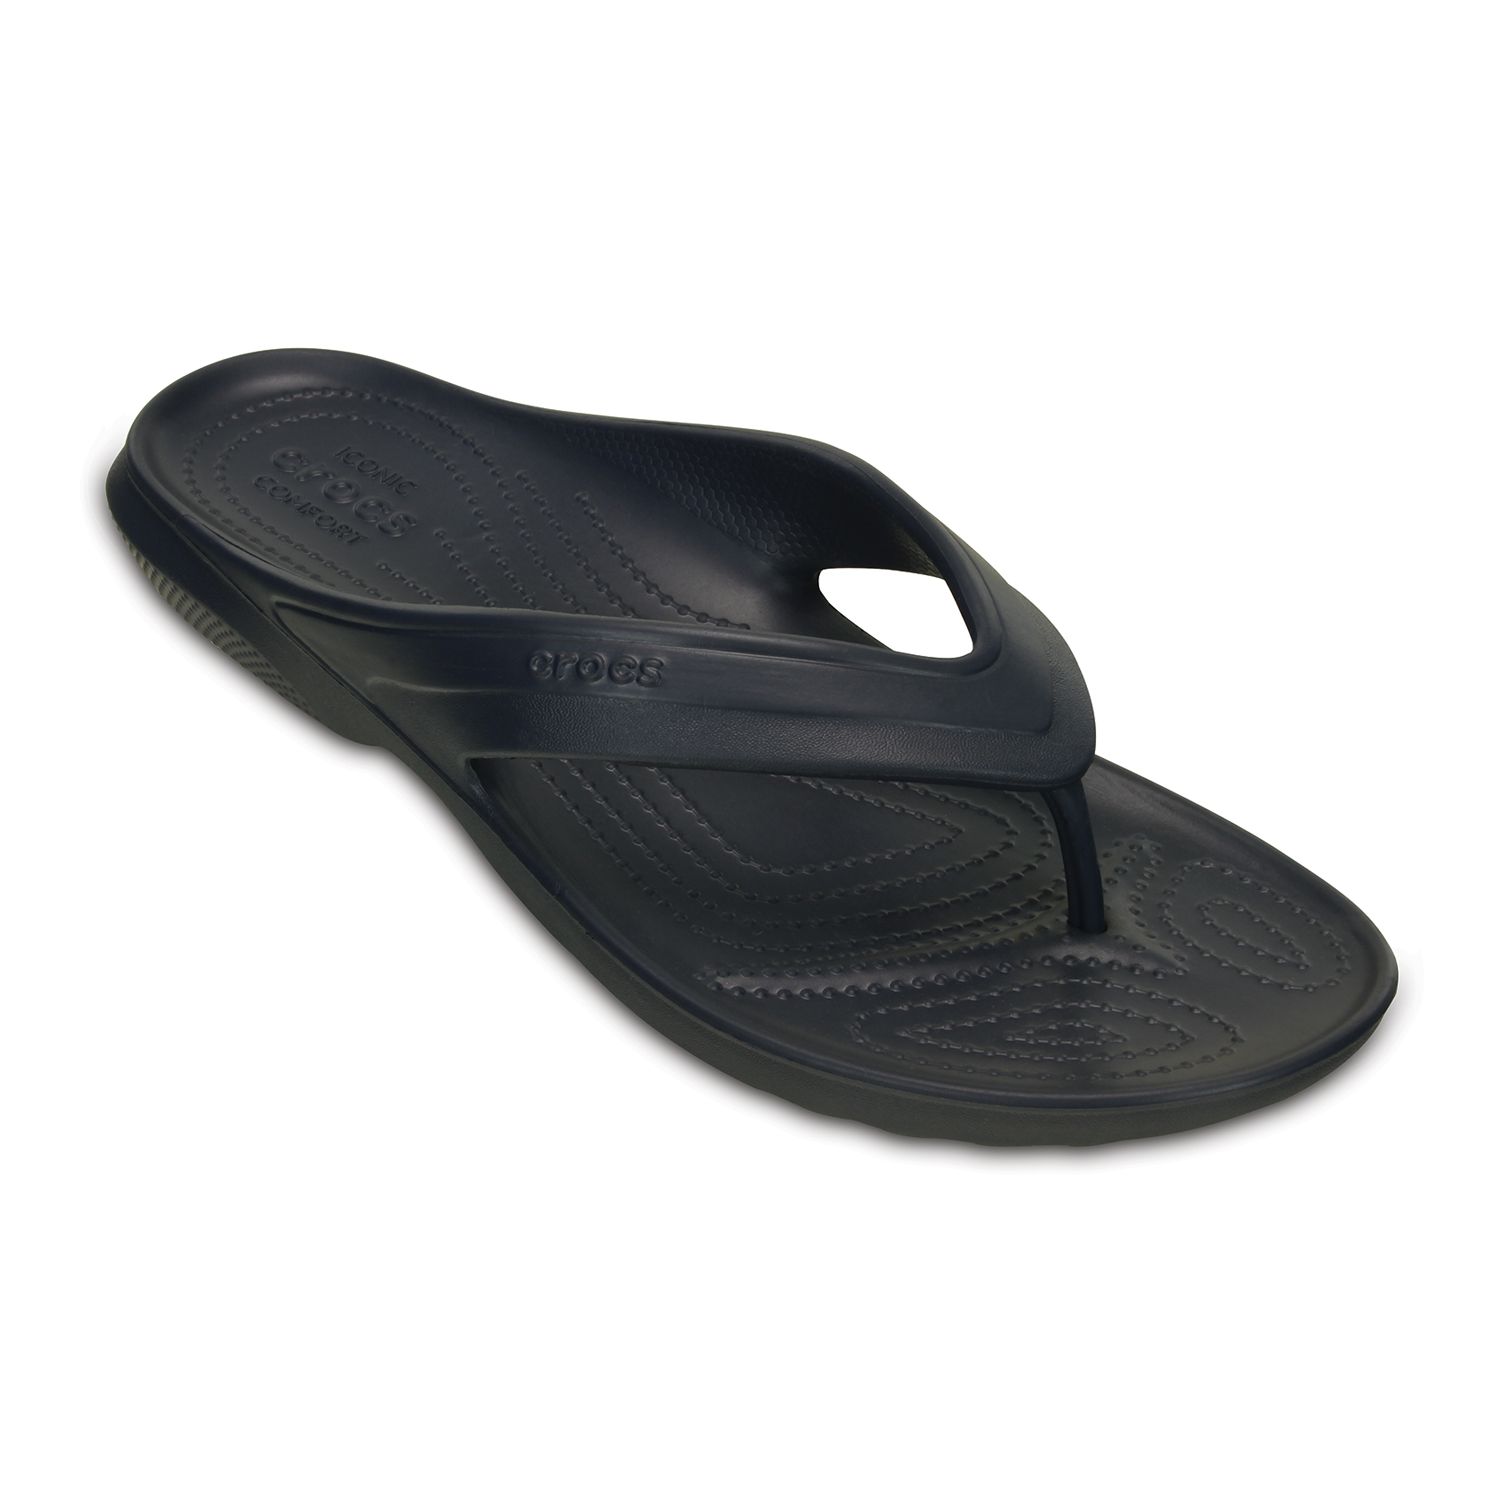 espadrilles flip flop sandals